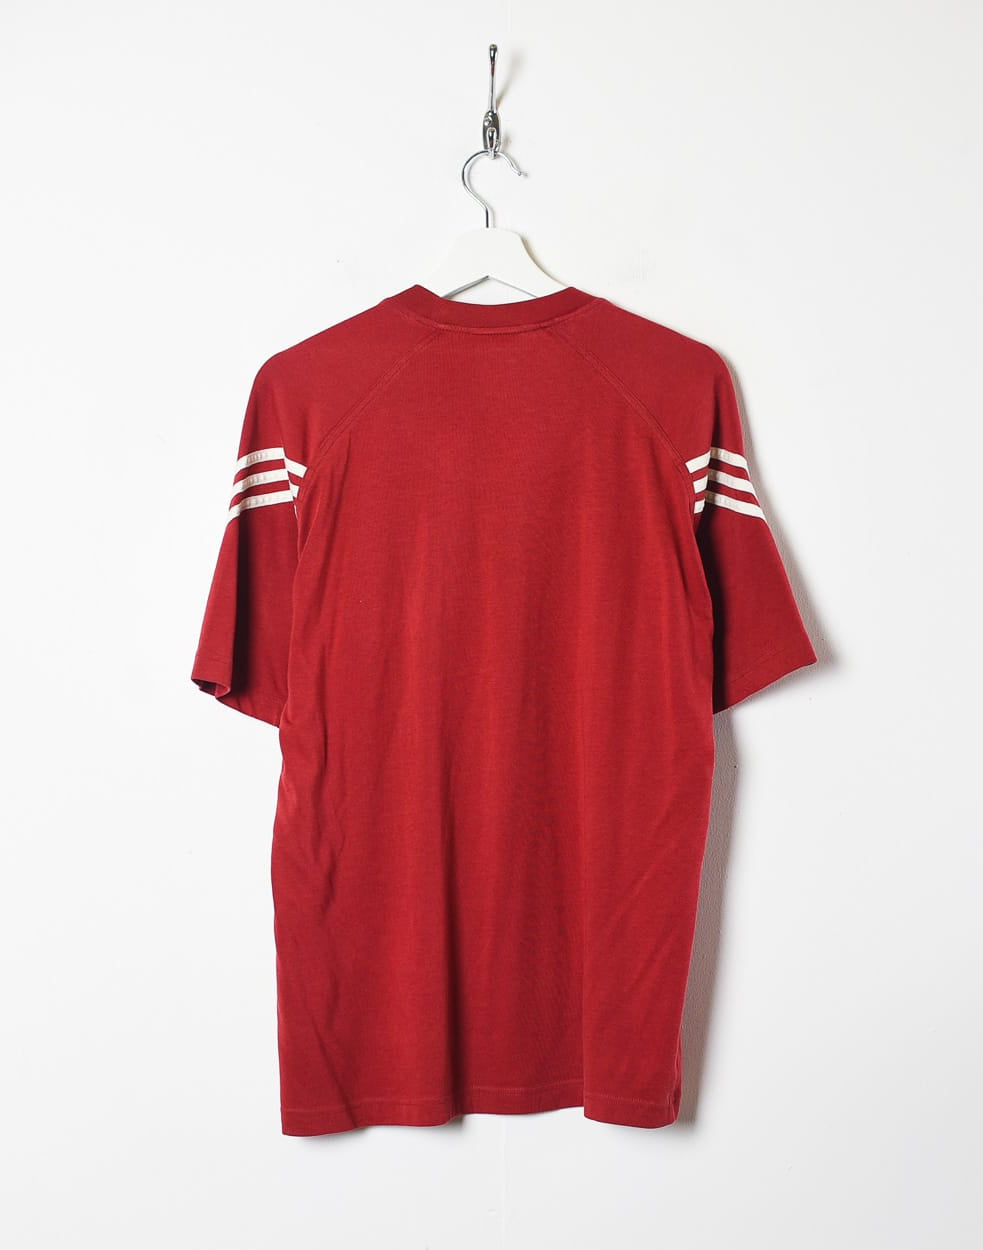 Maroon Adidas T-Shirt - Medium